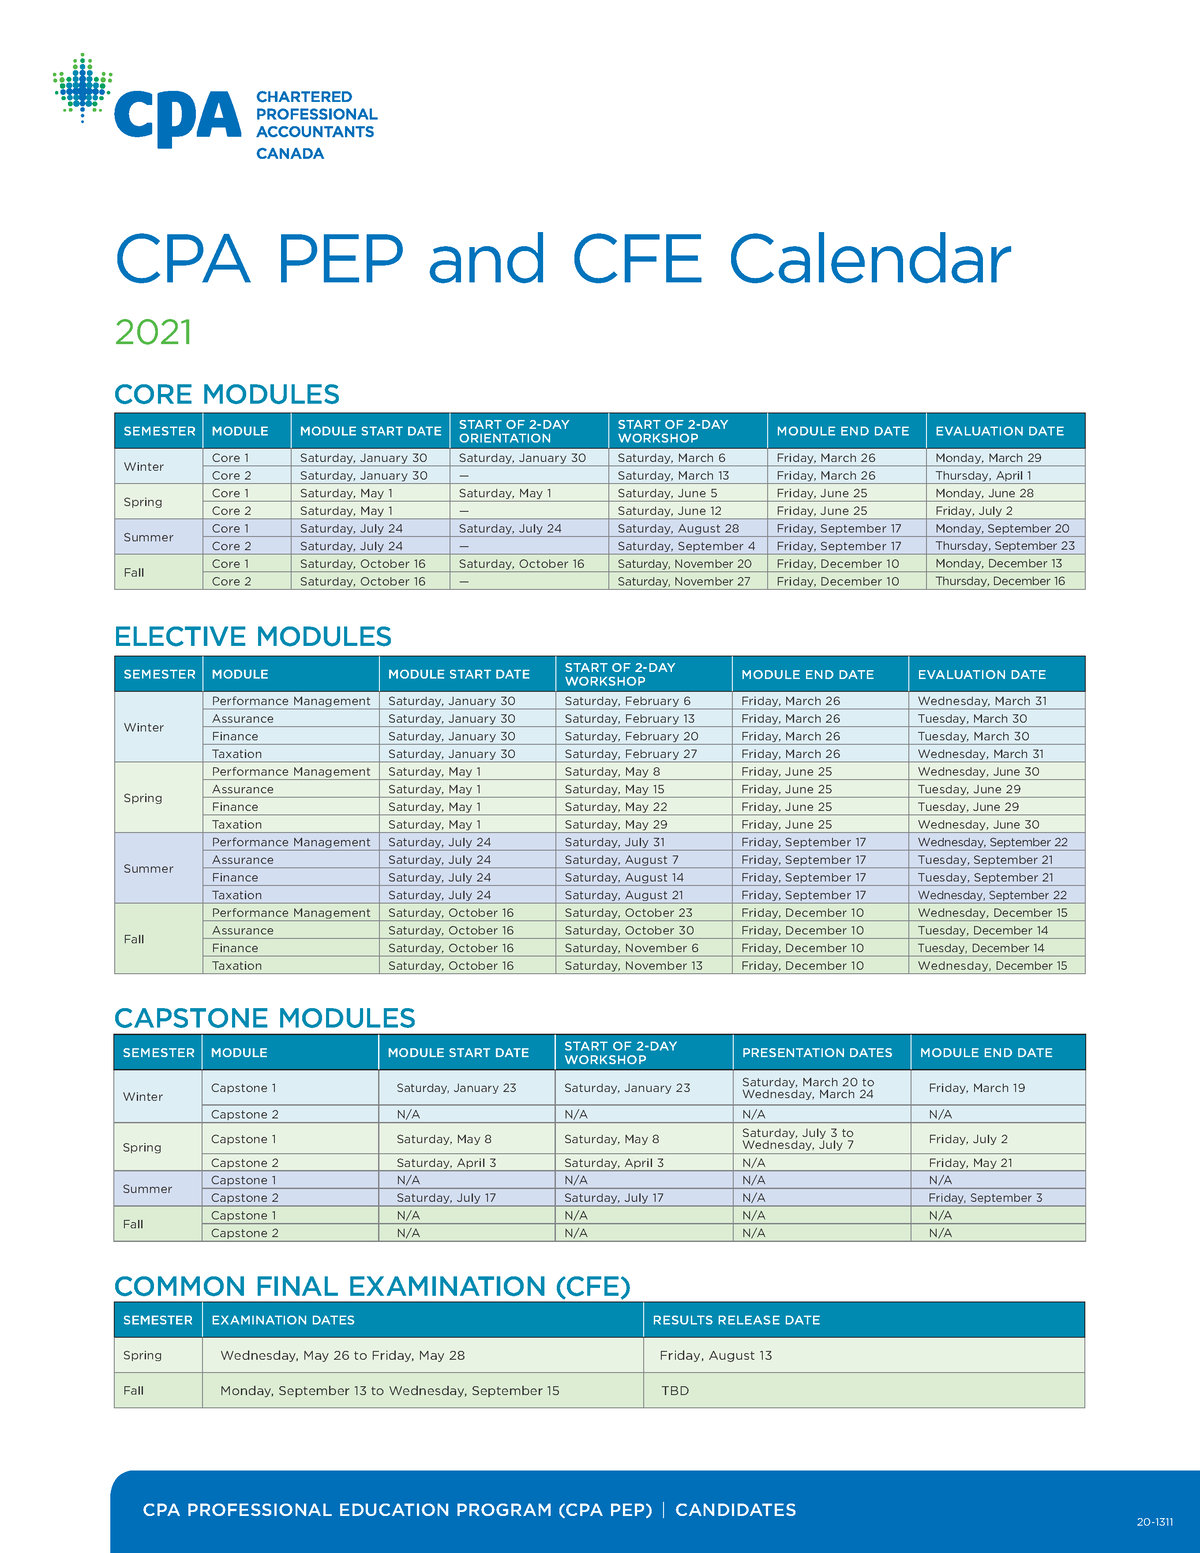 01289ECPEPCFECalendar21 CPA PROFESSIONAL EDUCATION PROGRAM (CPA